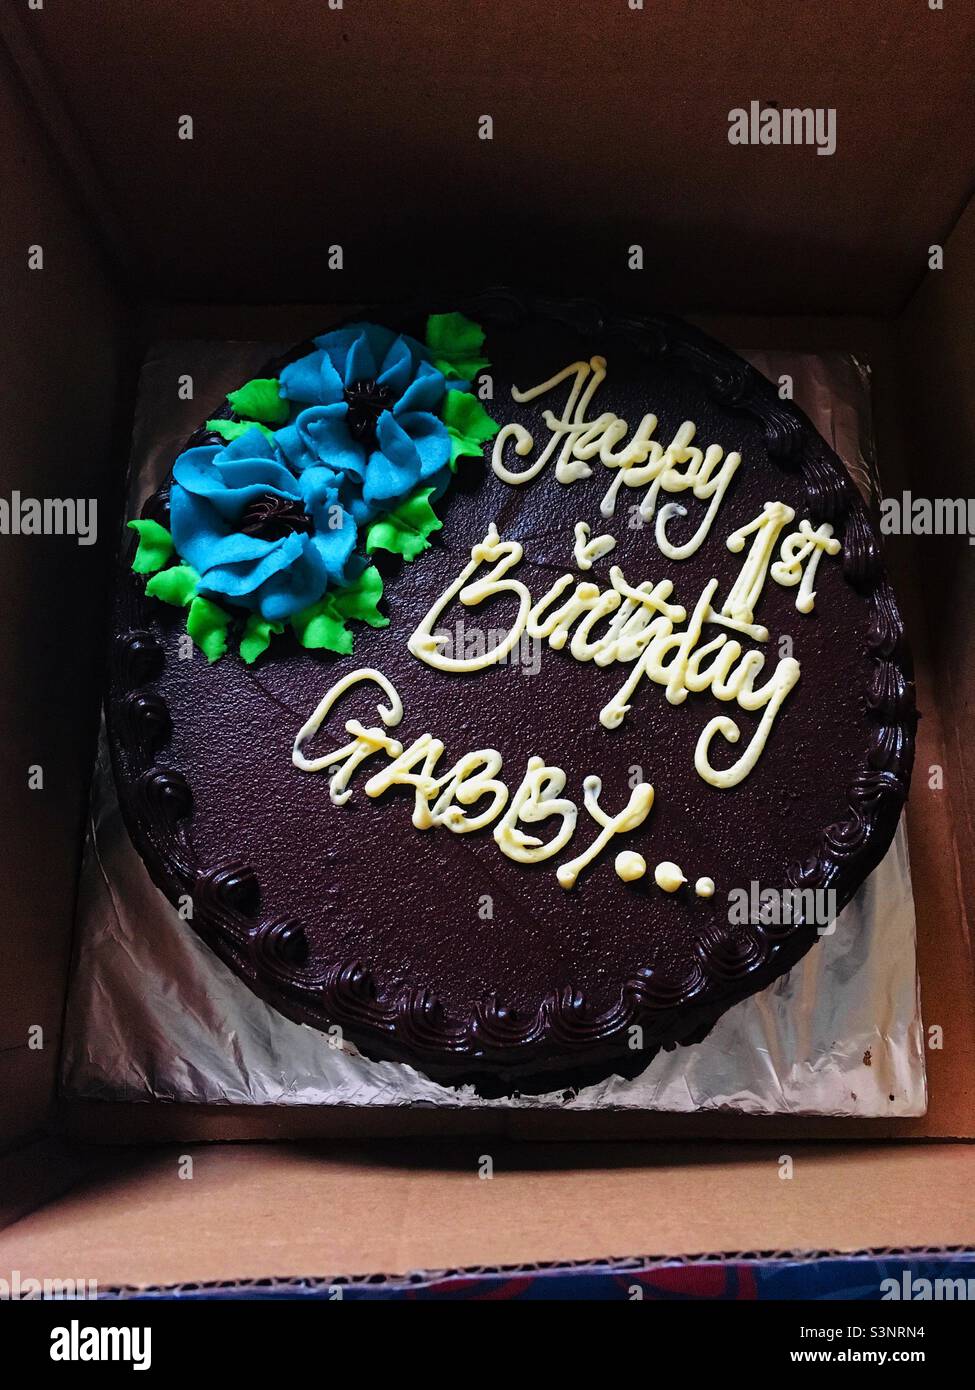 Birthday cake for Gabby Stock Photo - Alamy